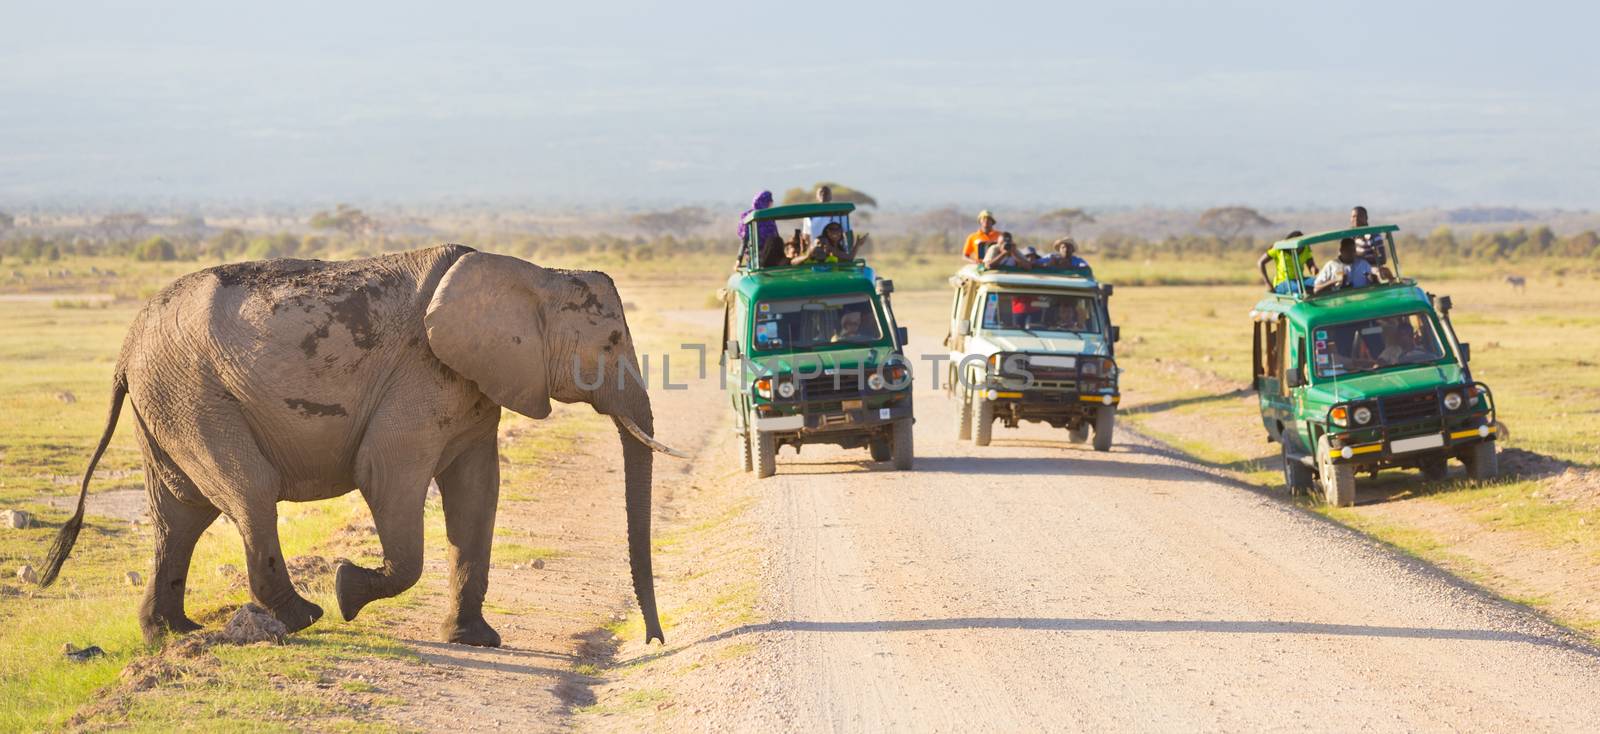 Elephantt crossing dirt roadi in Amboseli, Kenya. by kasto